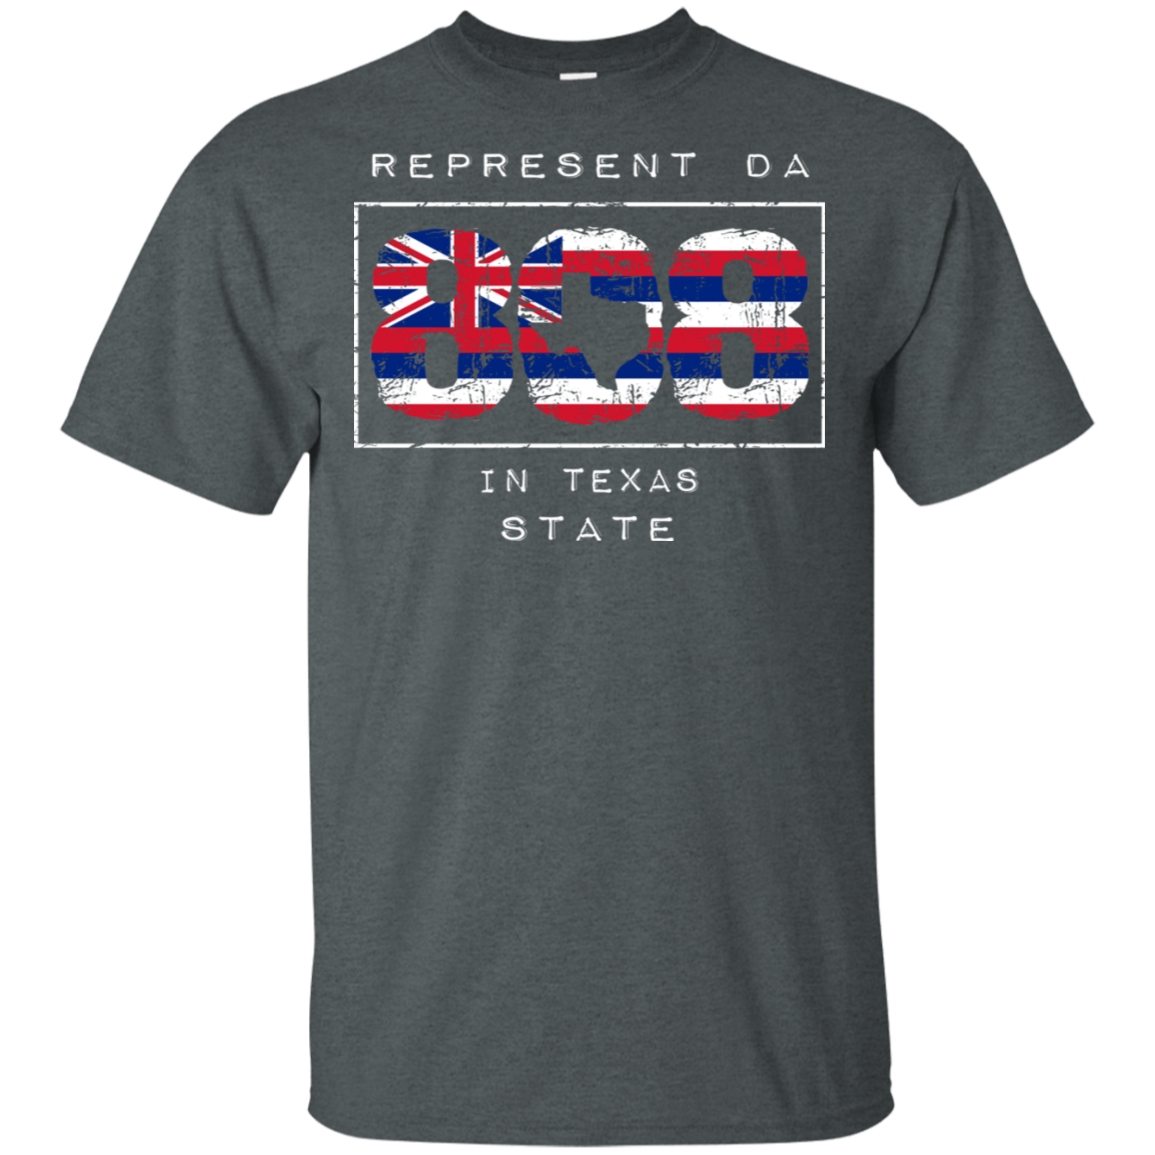 Rep Da 808 In Texas State Ultra Cotton T-Shirt, T-Shirts, Hawaii Nei All Day